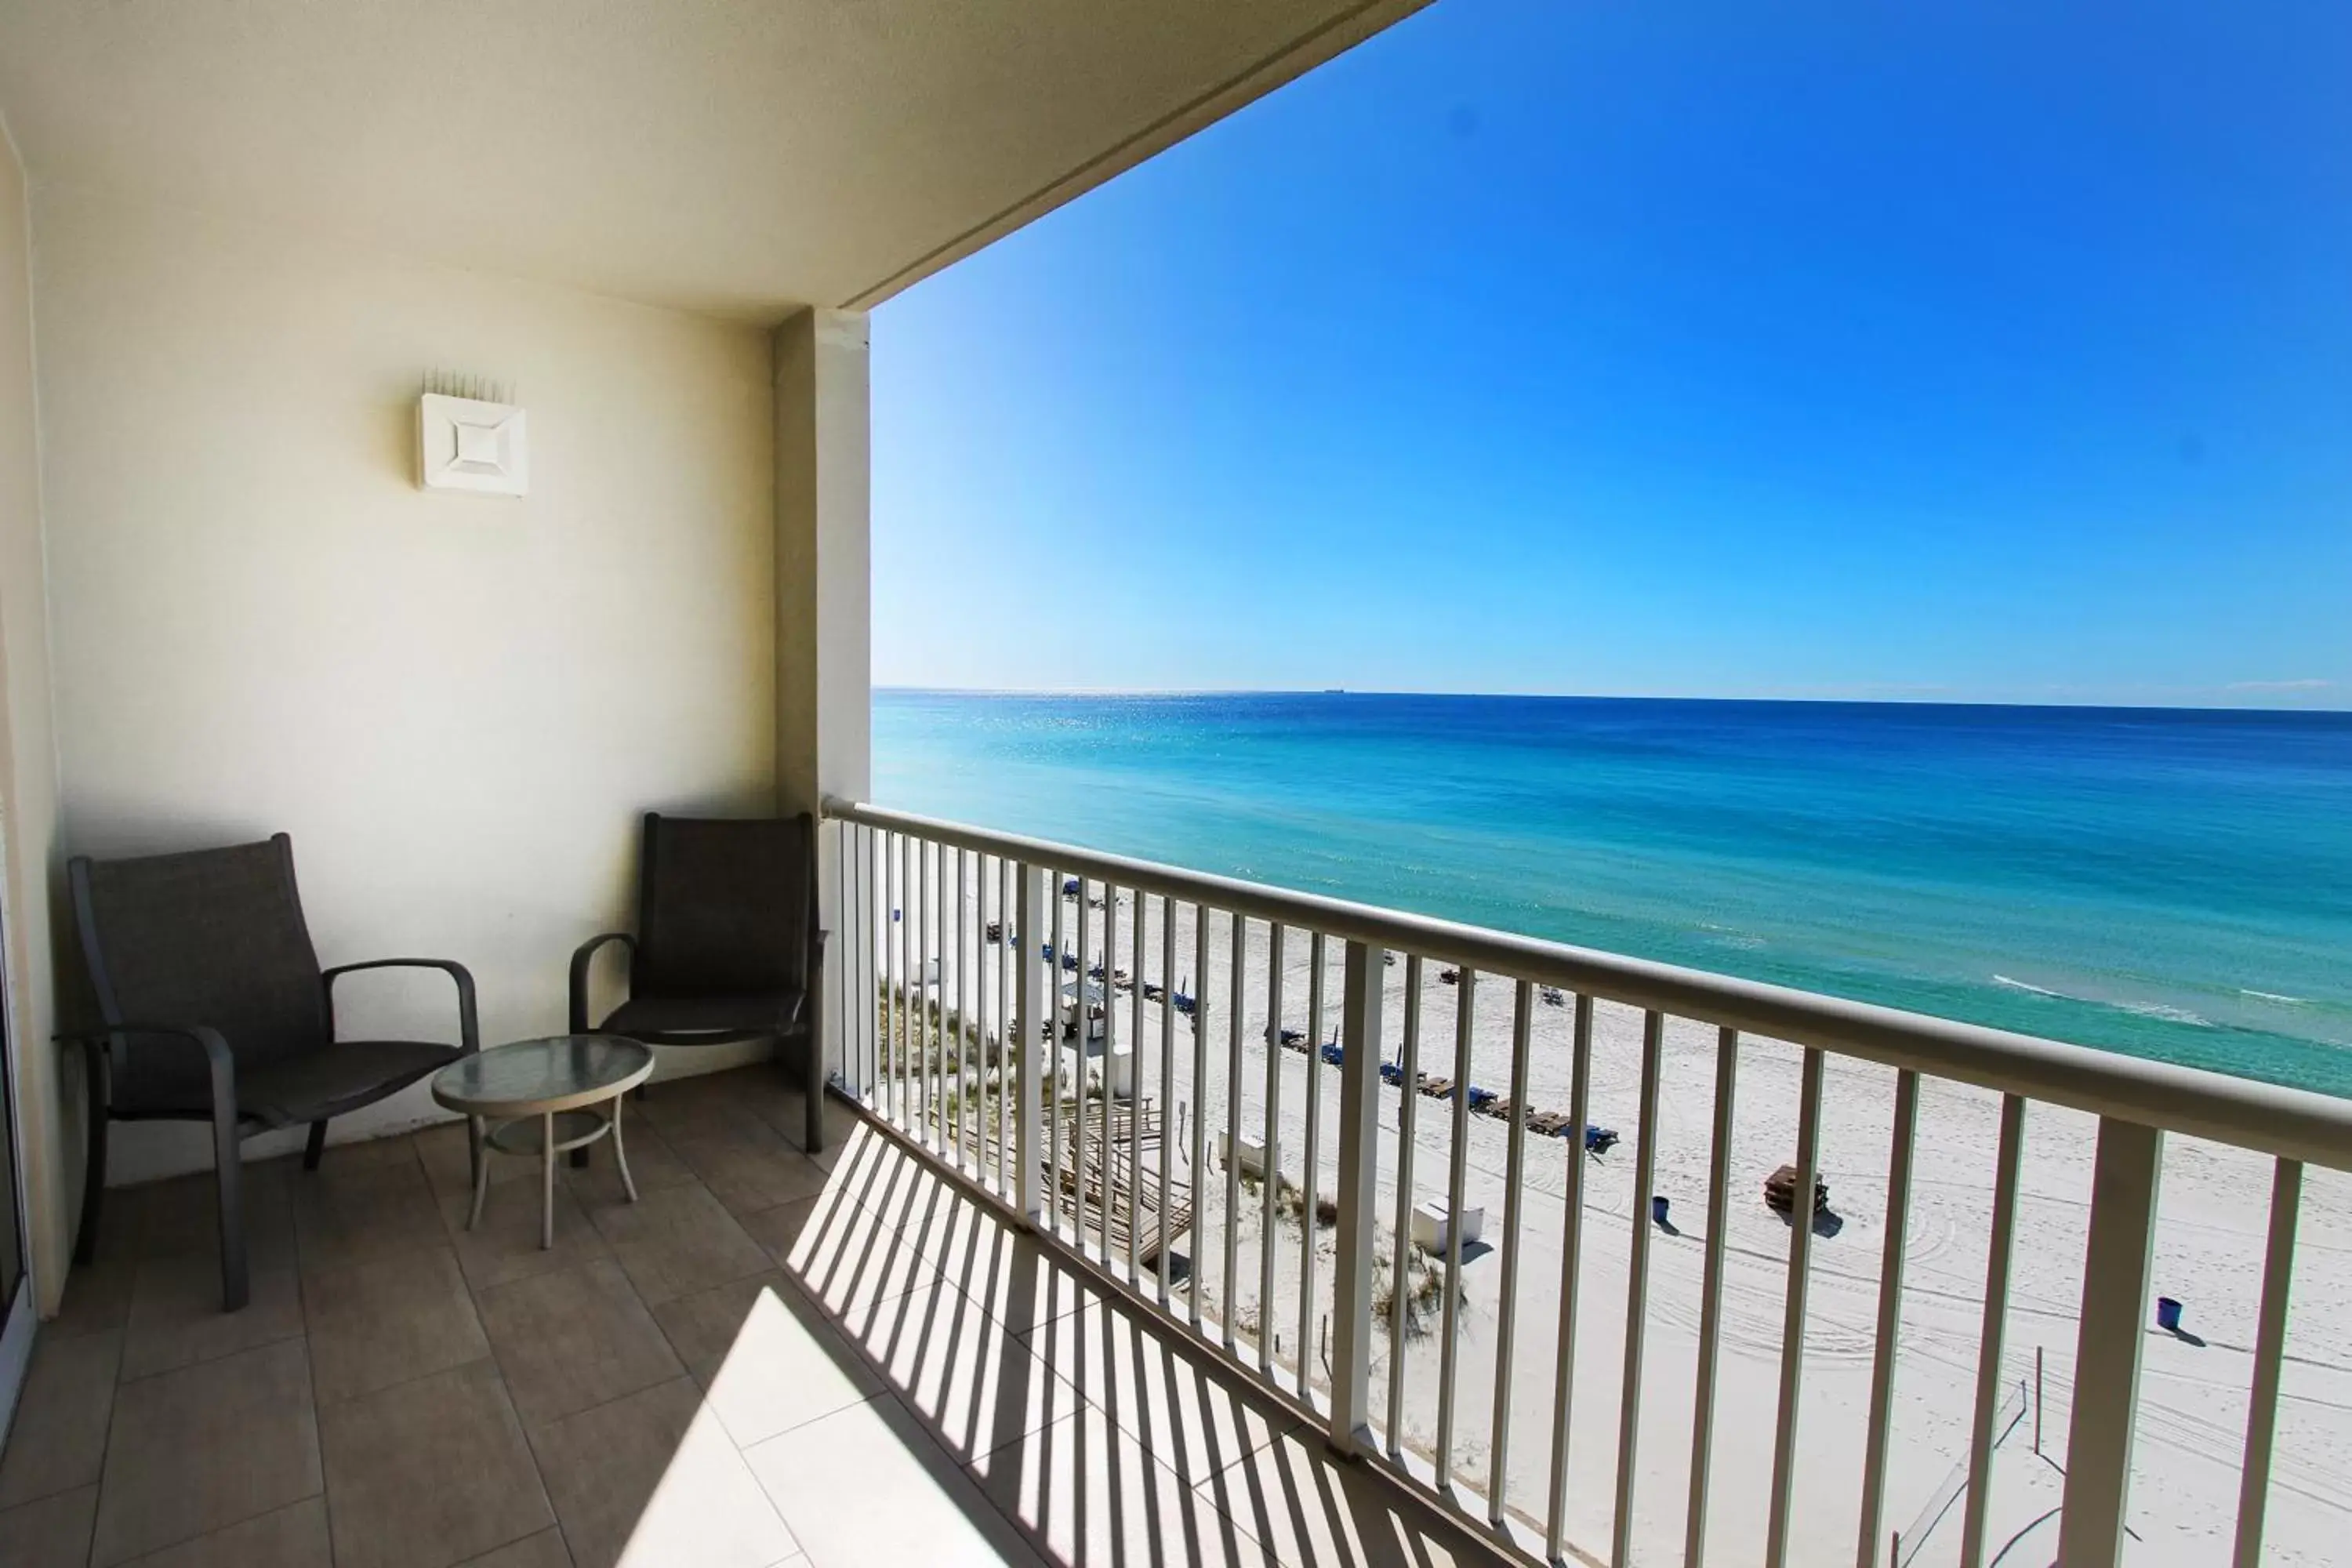 Balcony/Terrace, Sea View in Majestic Beach Resort, Panama City Beach, Fl